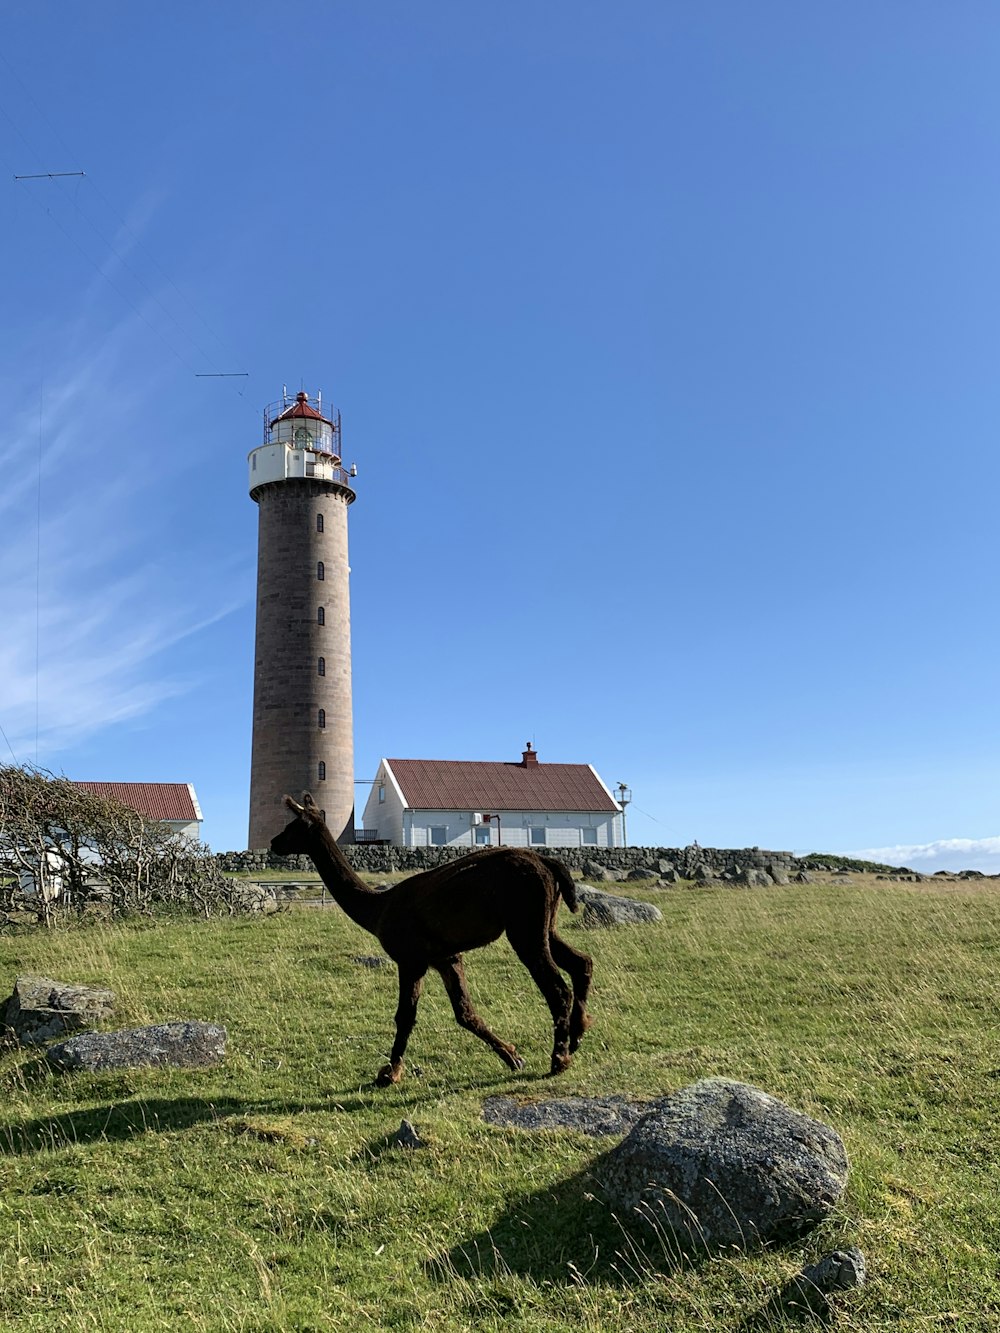 black llama standing on grass field near lighthouse